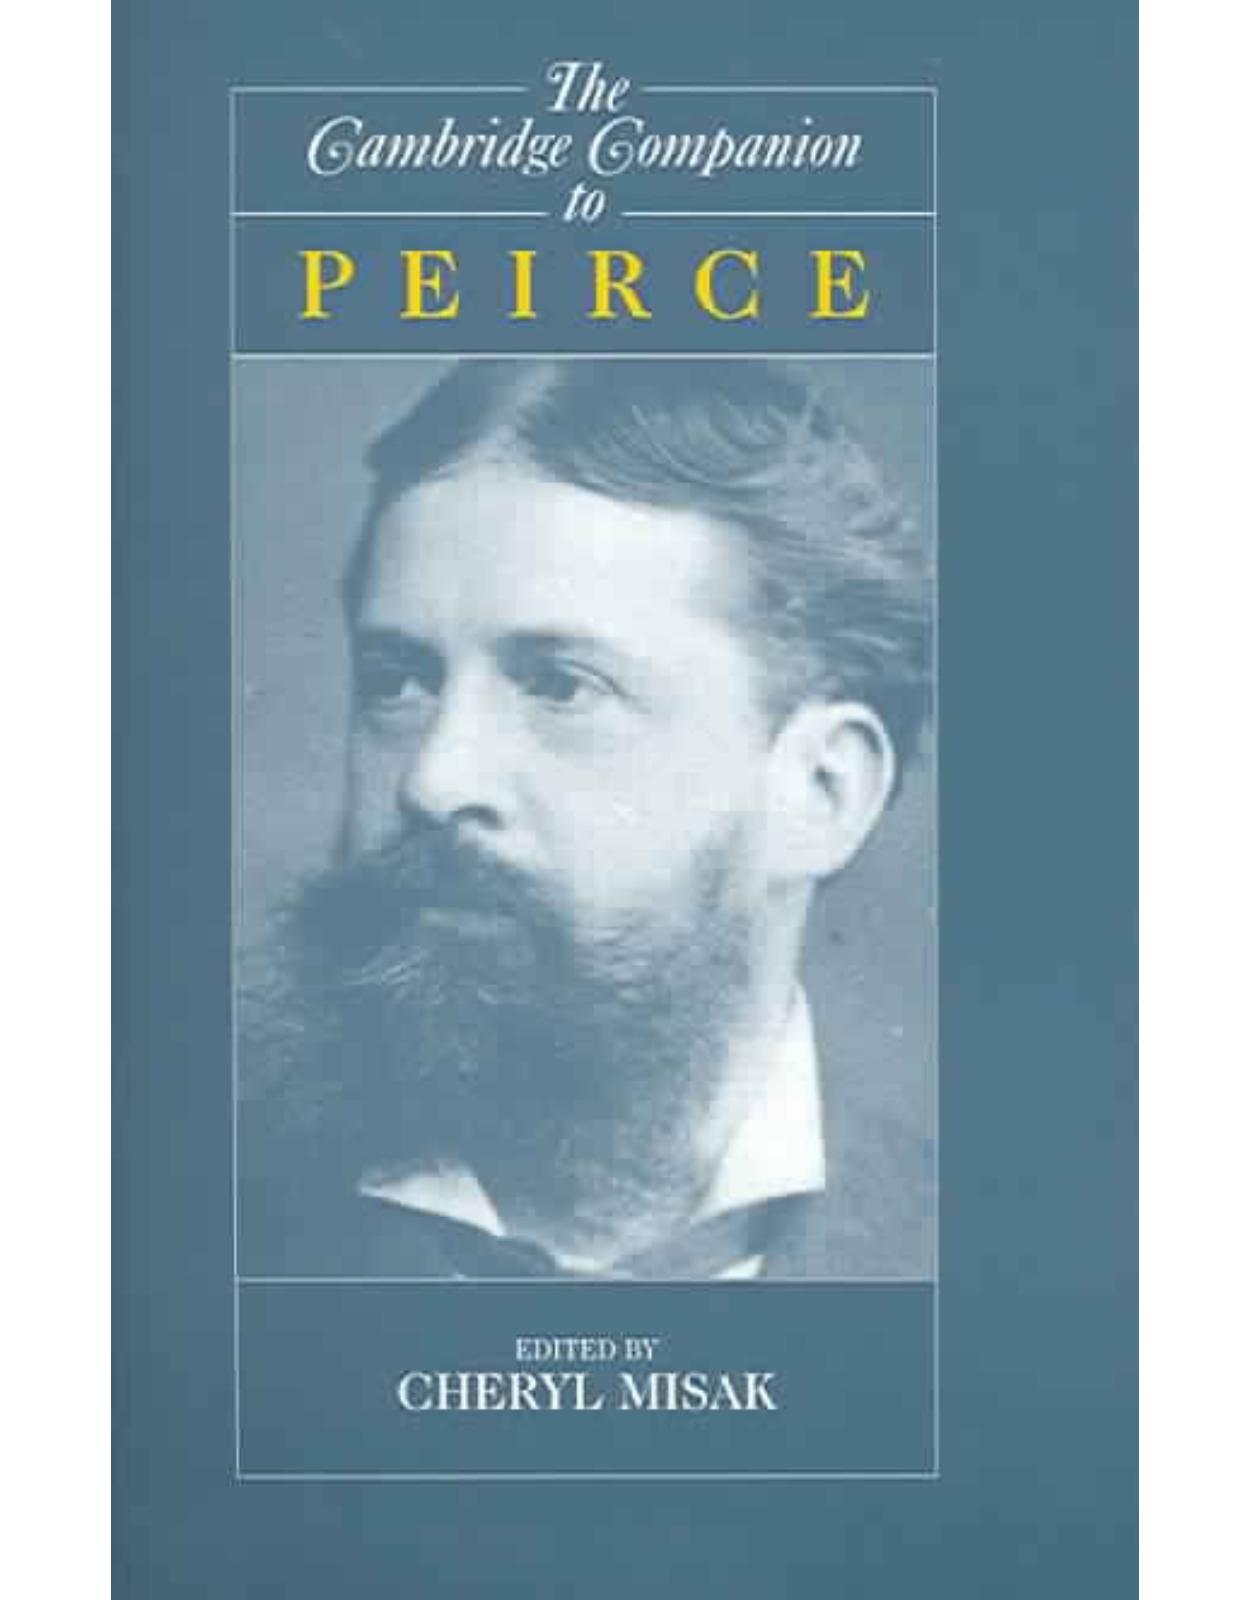 The Cambridge Companion to Peirce (Cambridge Companions to Philosophy)